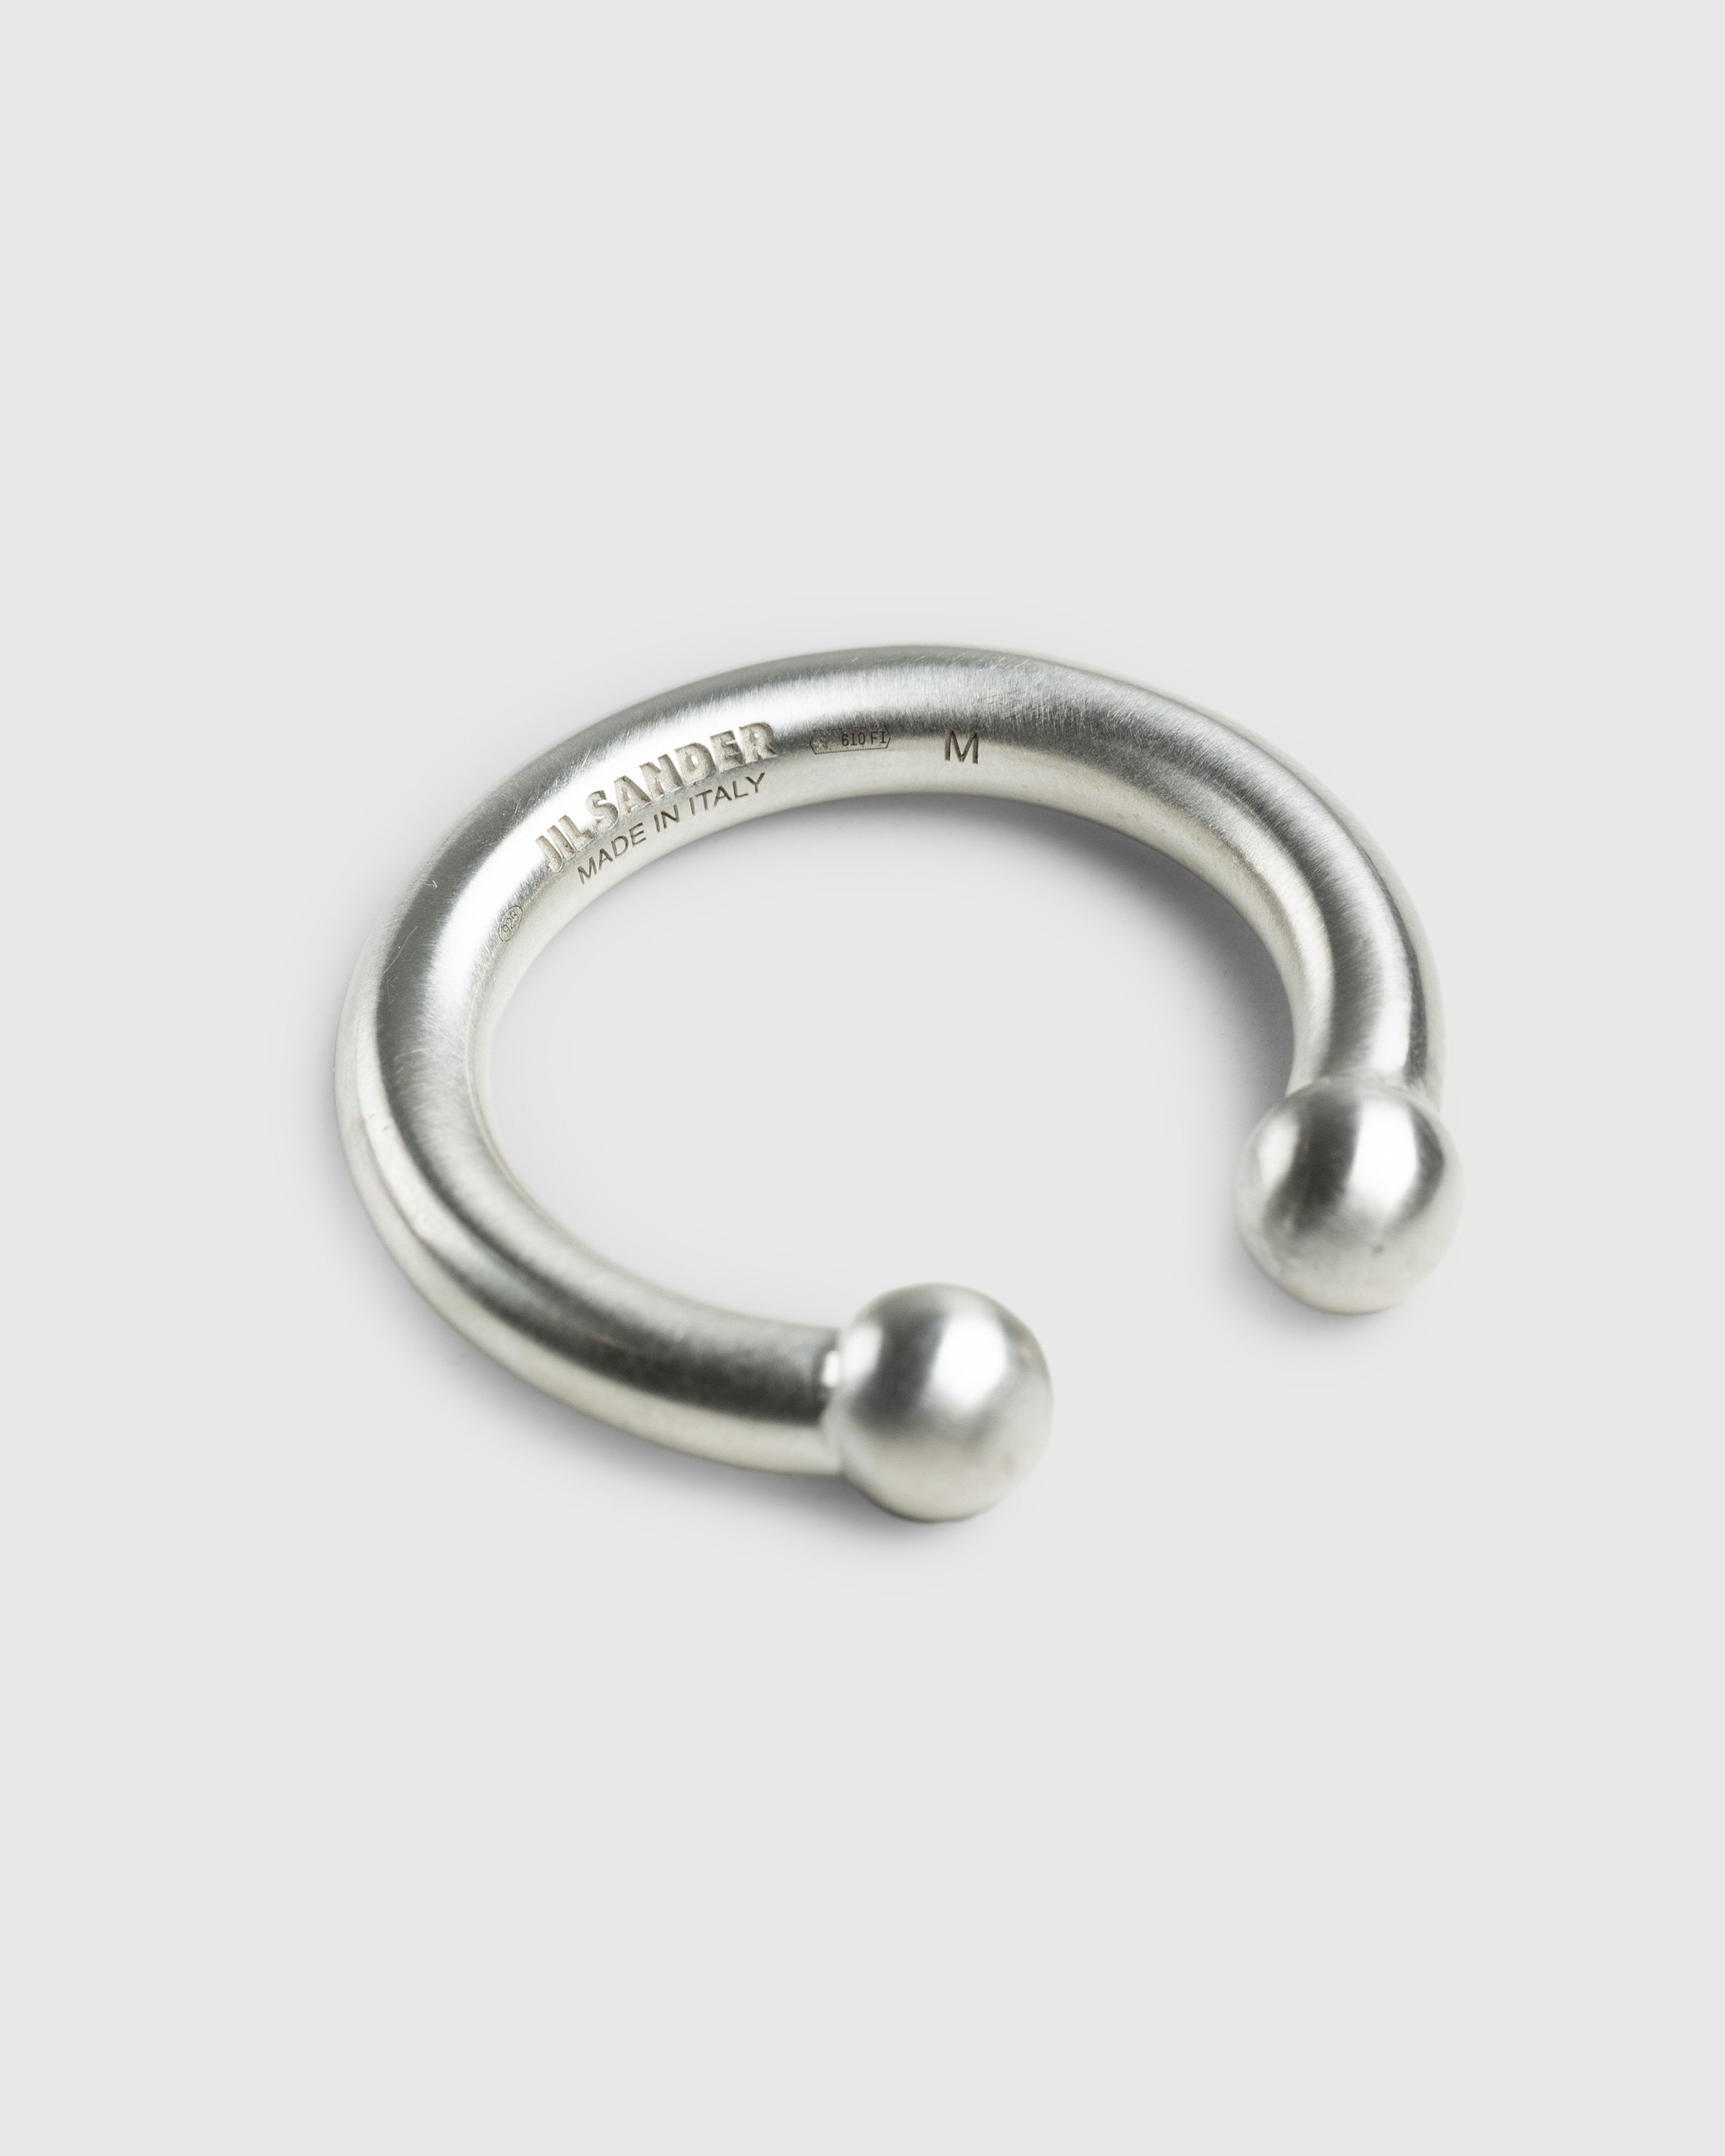 Jil Sander – Open Ring Silver | Highsnobiety Shop